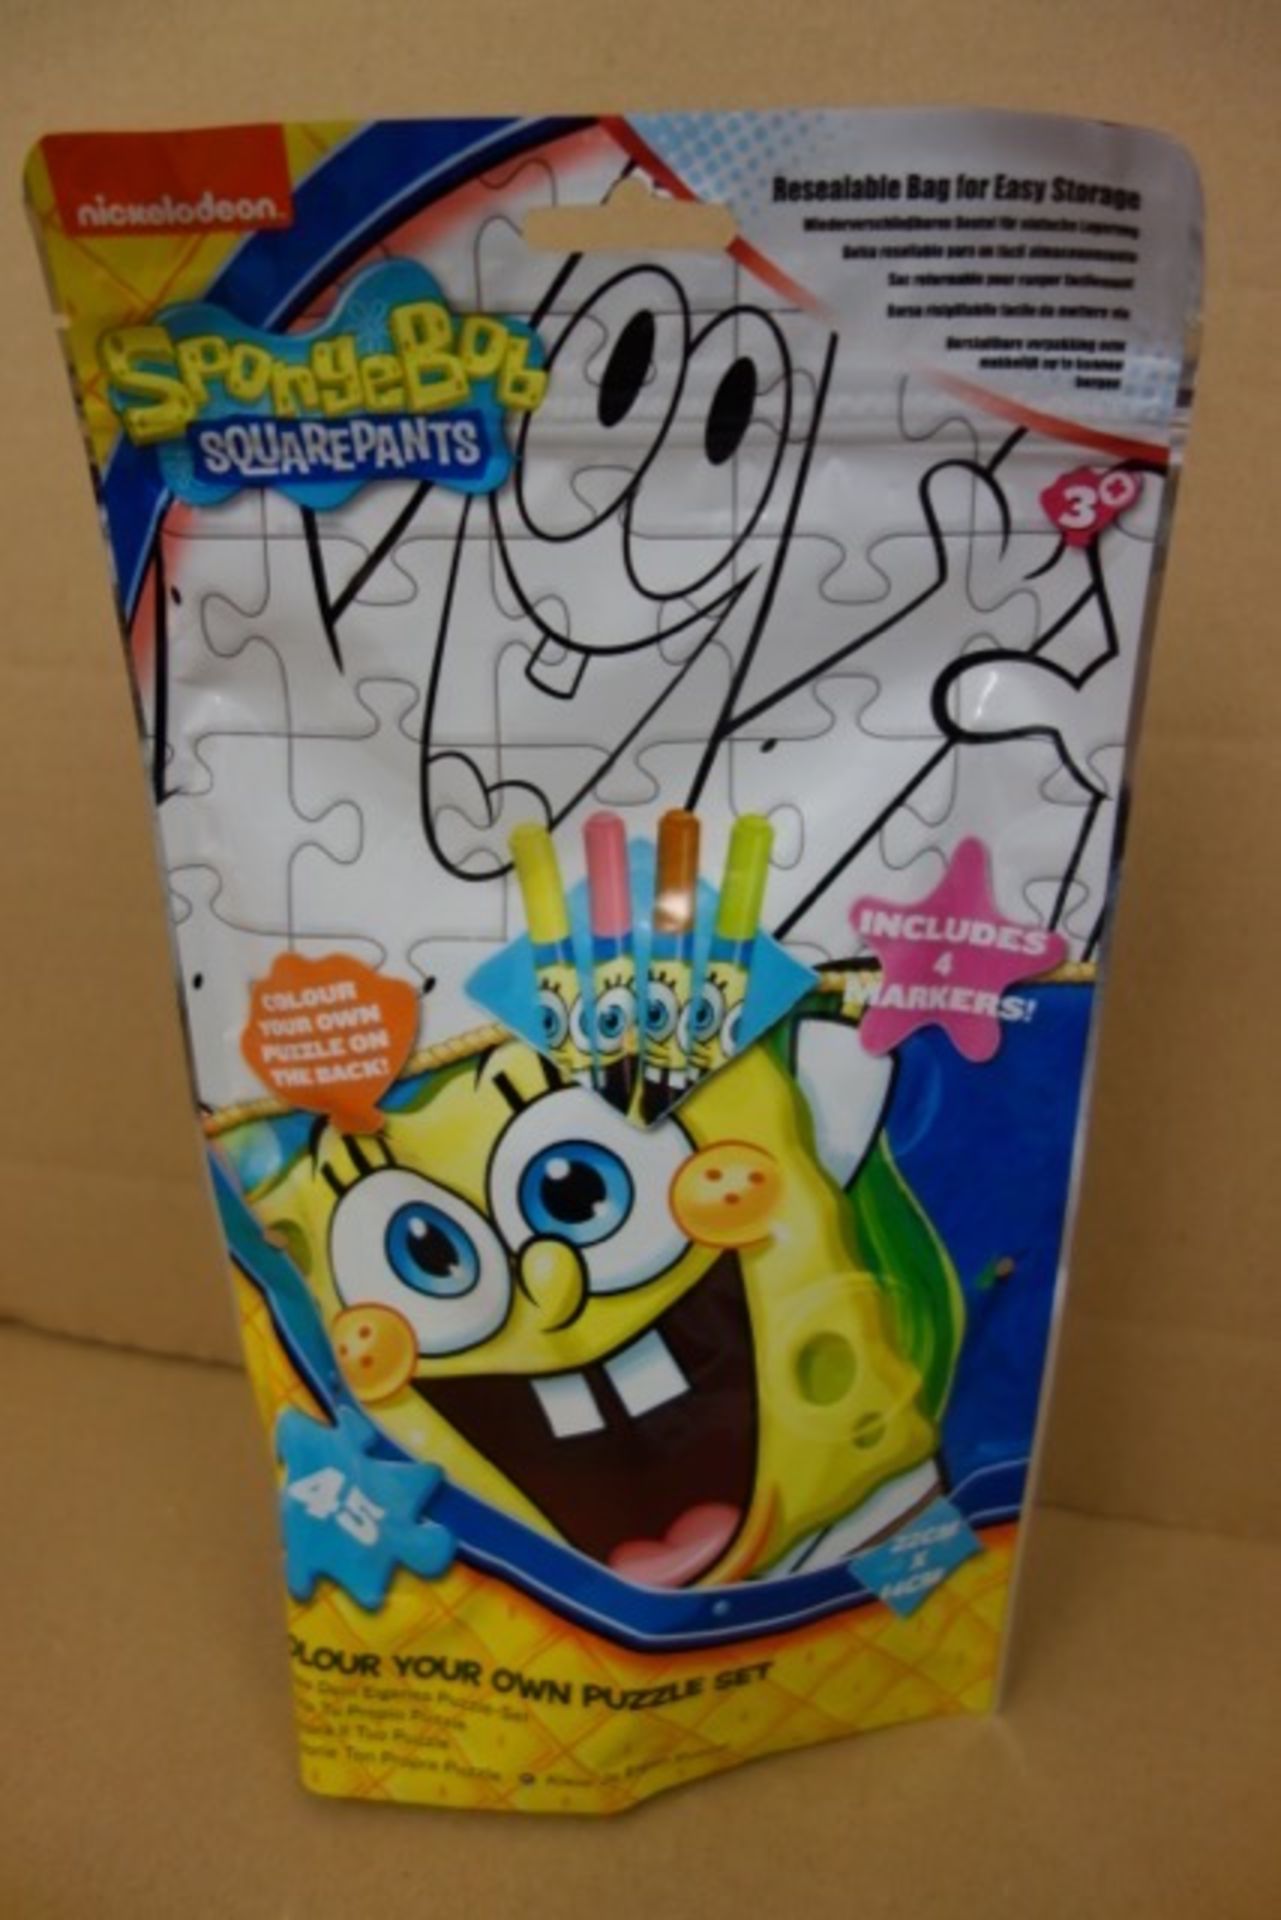 Pallet to contain 840 x Brand New Spongebob Squarepants Colour Your Own Puzzle Set. Includes